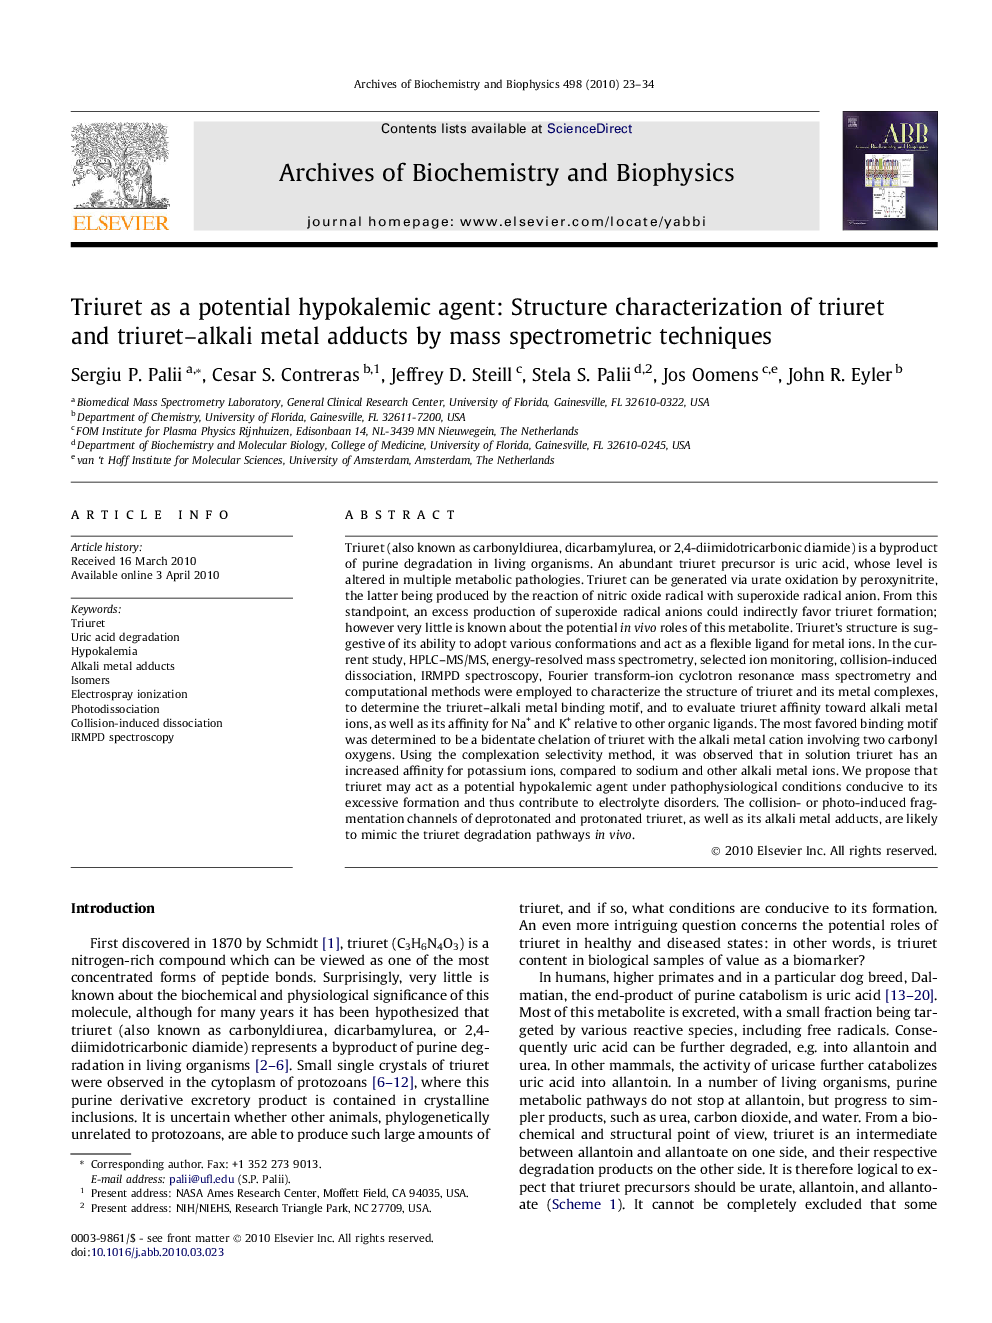 Triuret as a potential hypokalemic agent: Structure characterization of triuret and triuret–alkali metal adducts by mass spectrometric techniques